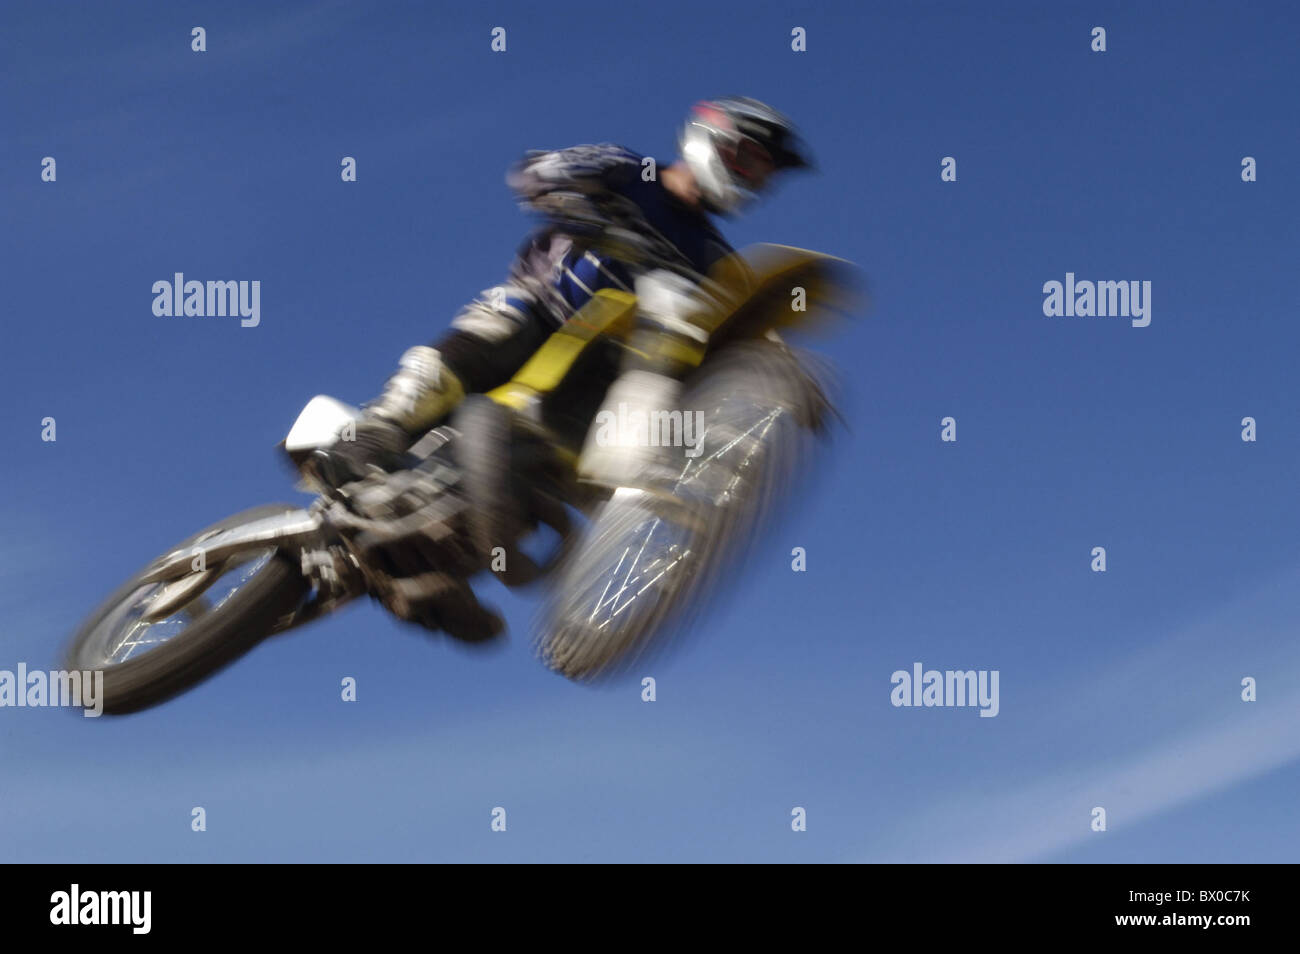 action individual driver sky moto cross motor sport running sport jump blurs Stock Photo